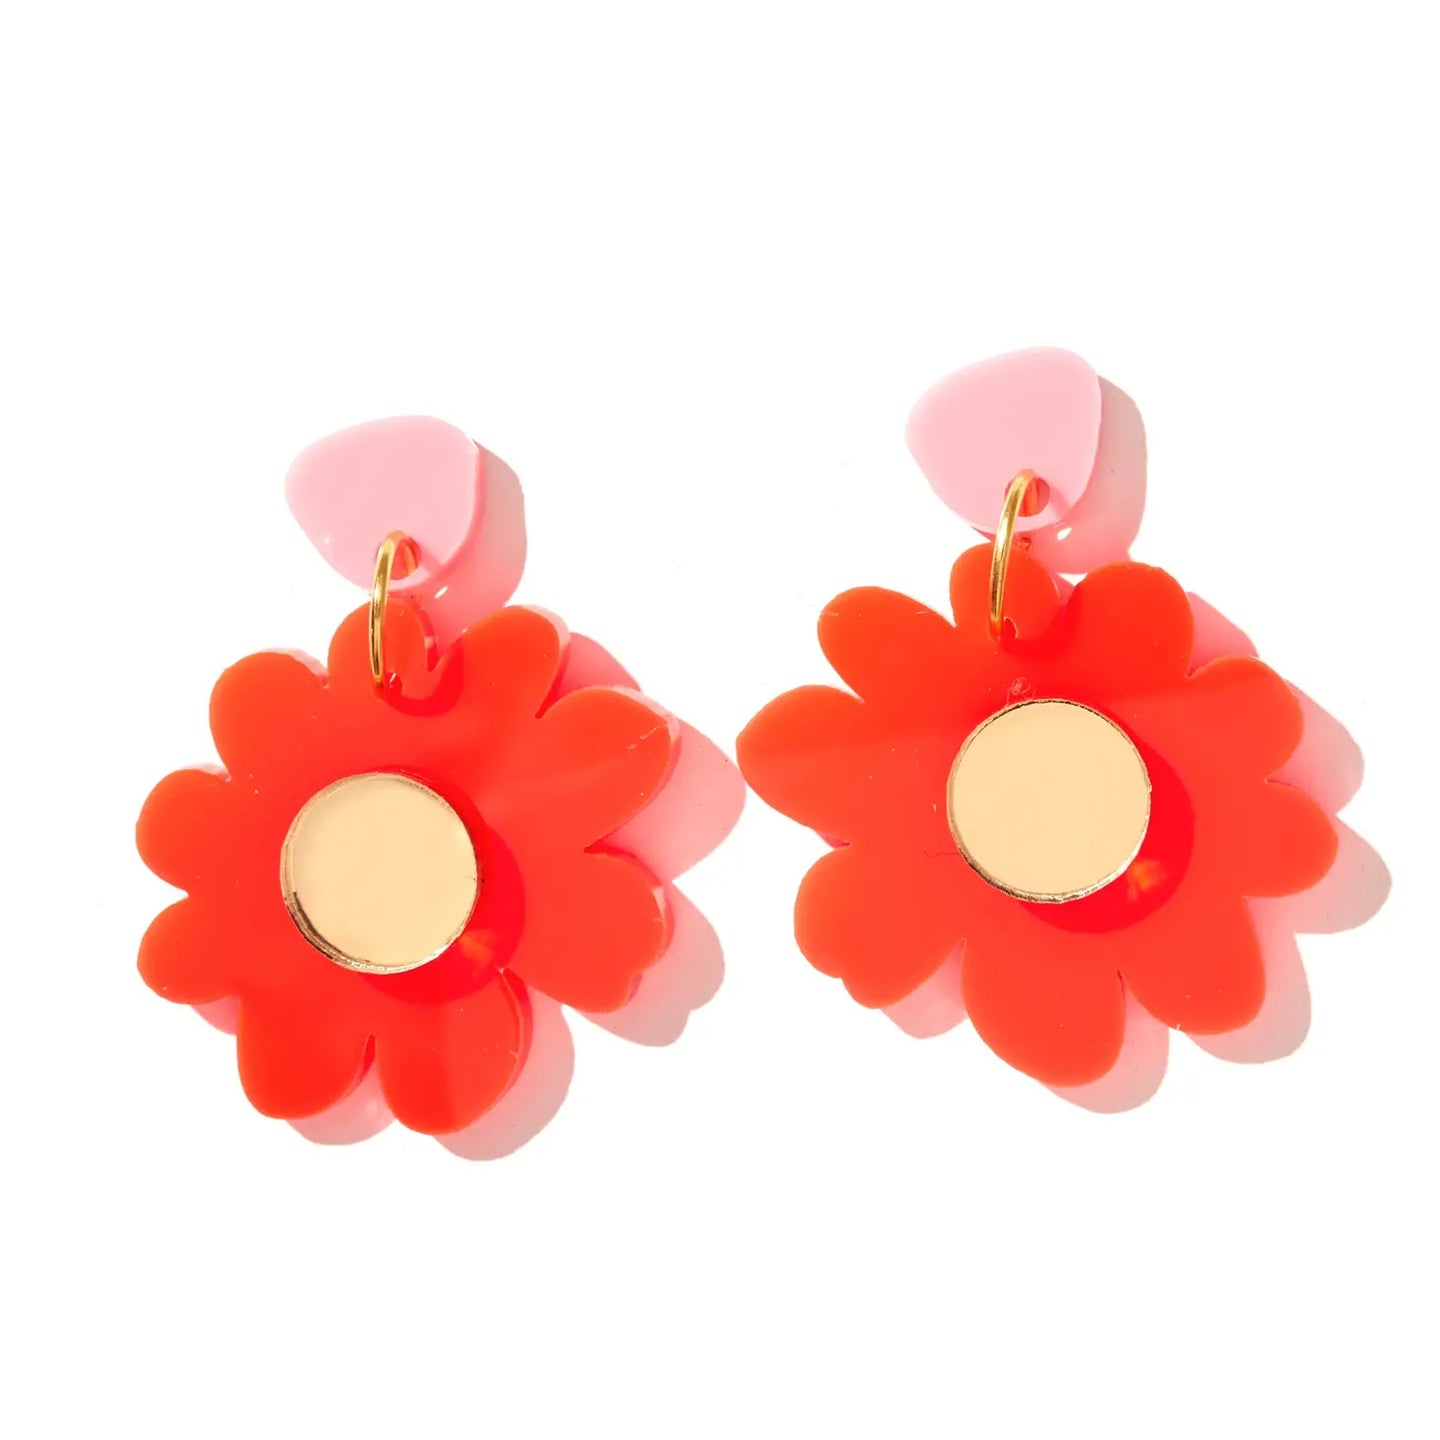 Emeldo Millie Flower Earrings in Neon Red